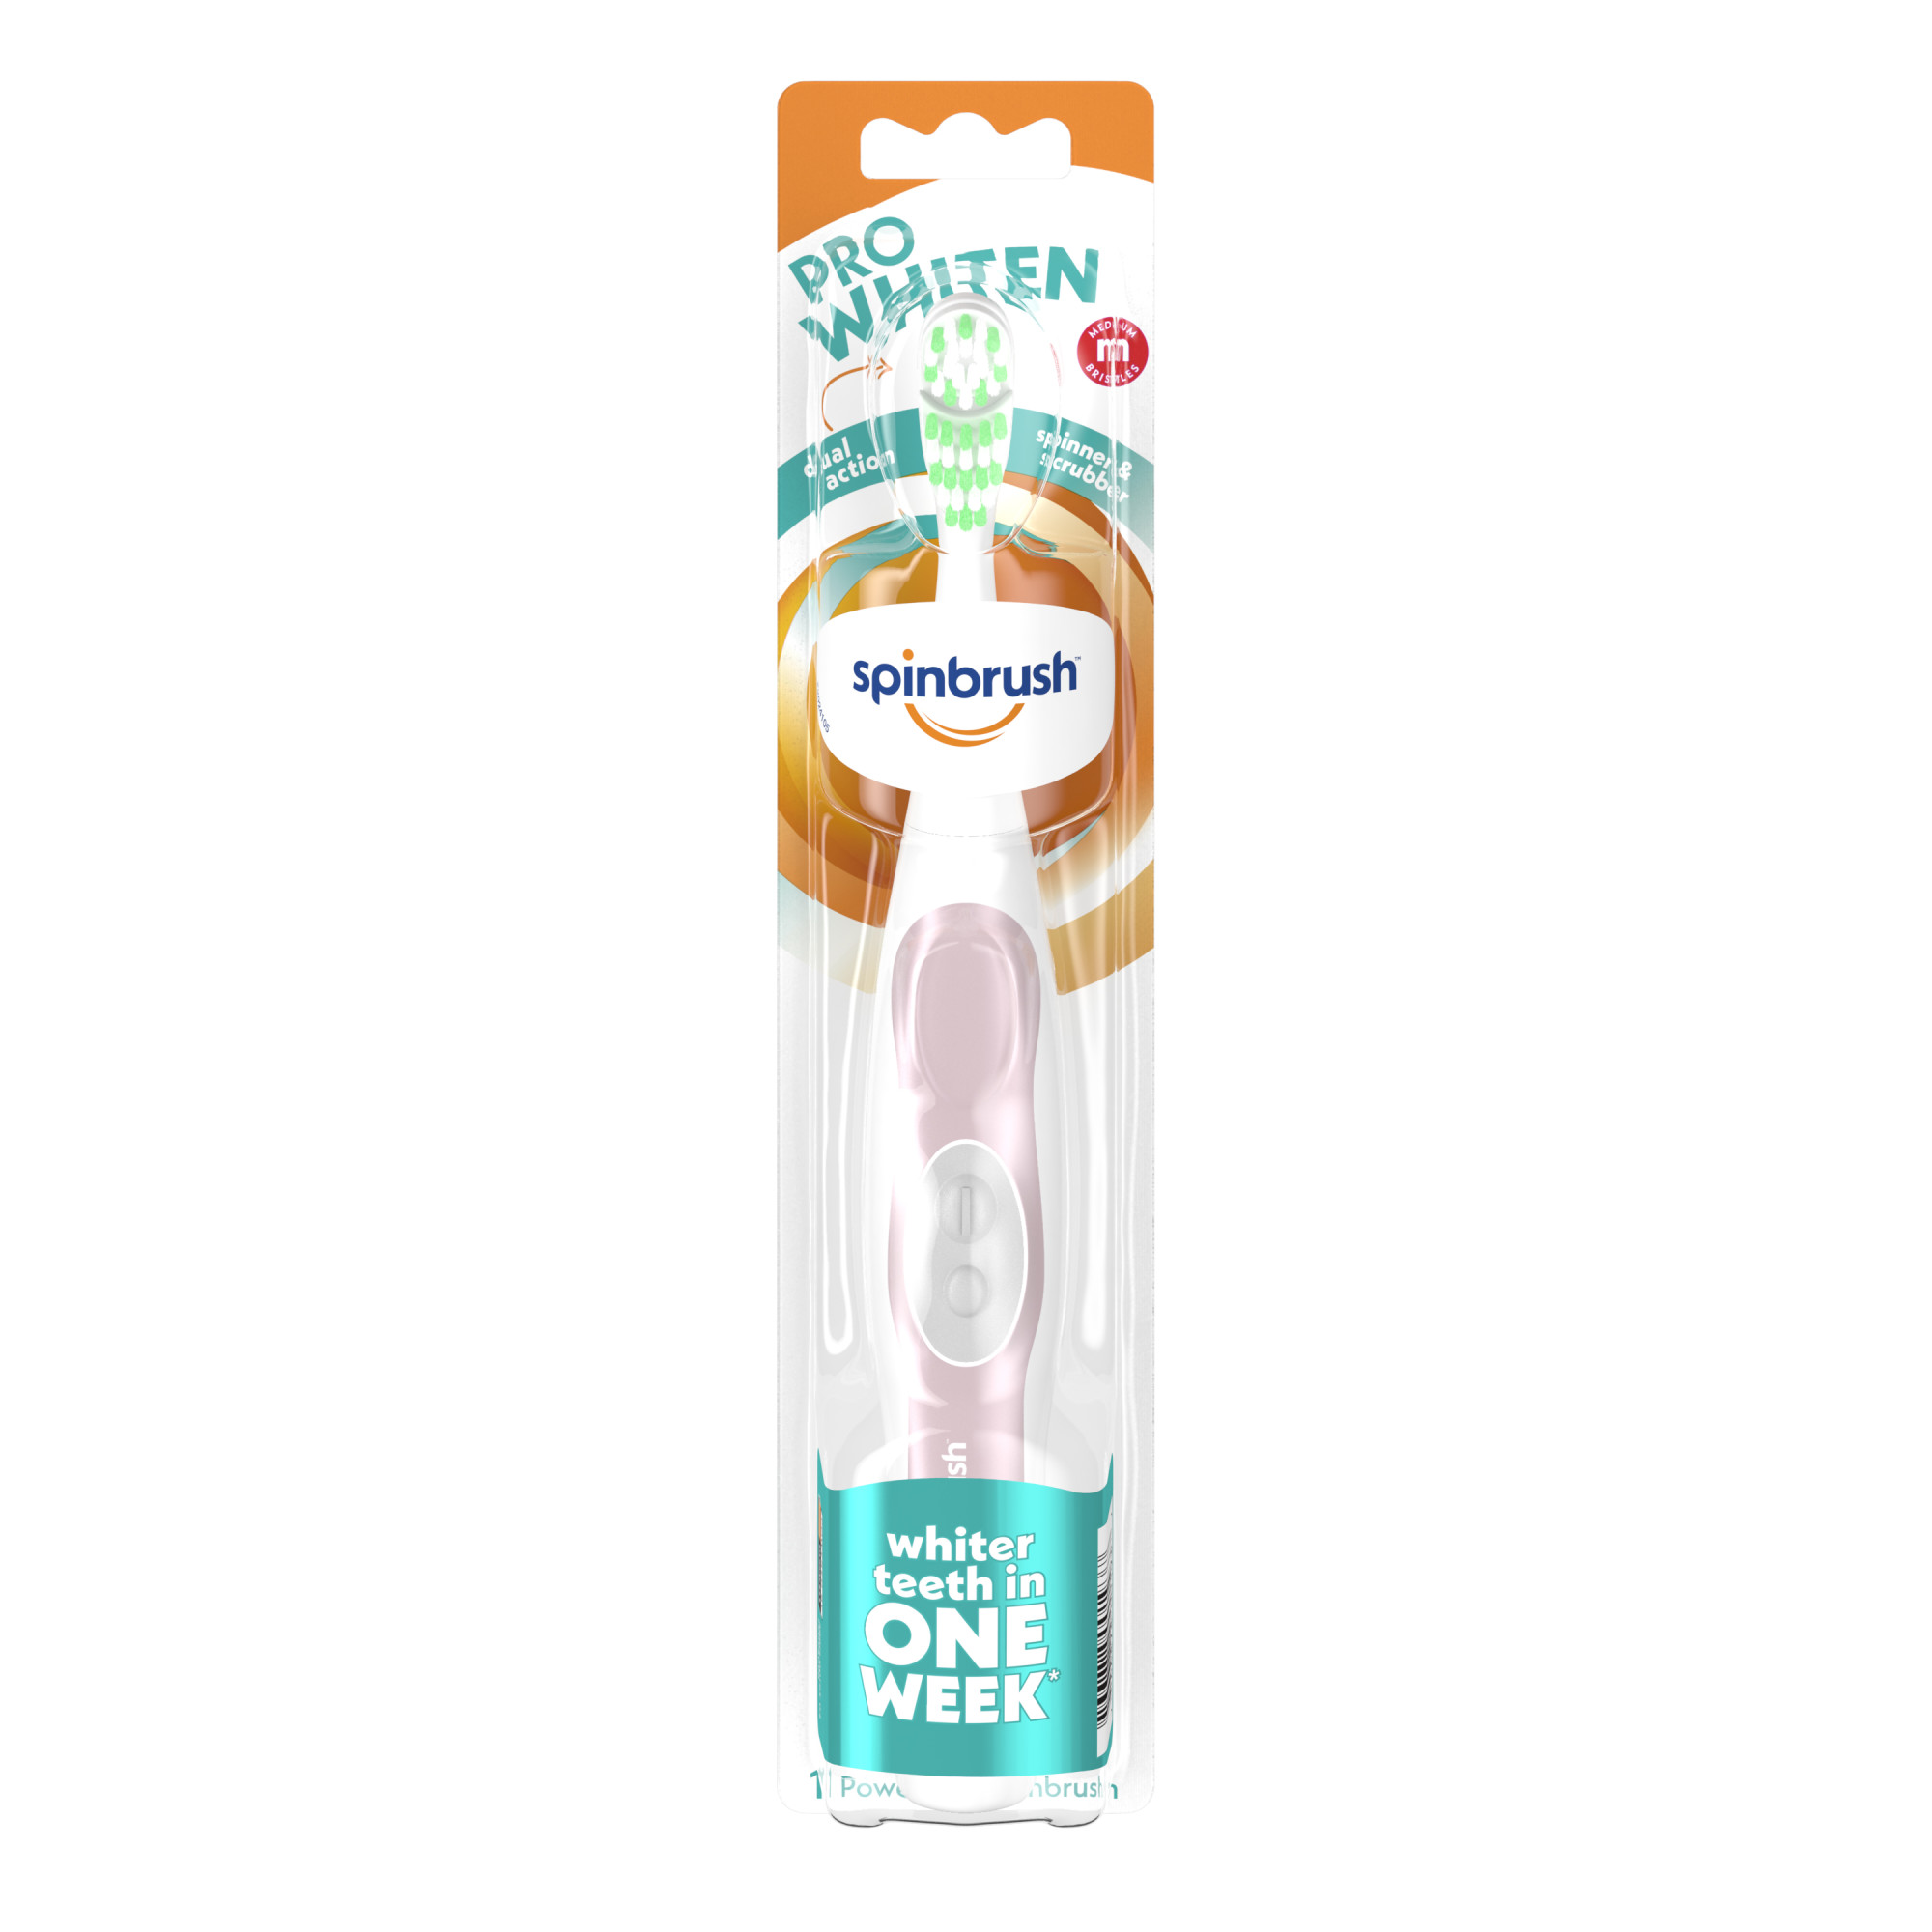 Spinbrush PRO WHITEN Battery Powered Toothbrush for Adults, Whitening Medium Bristles, Color Varies - image 1 of 7